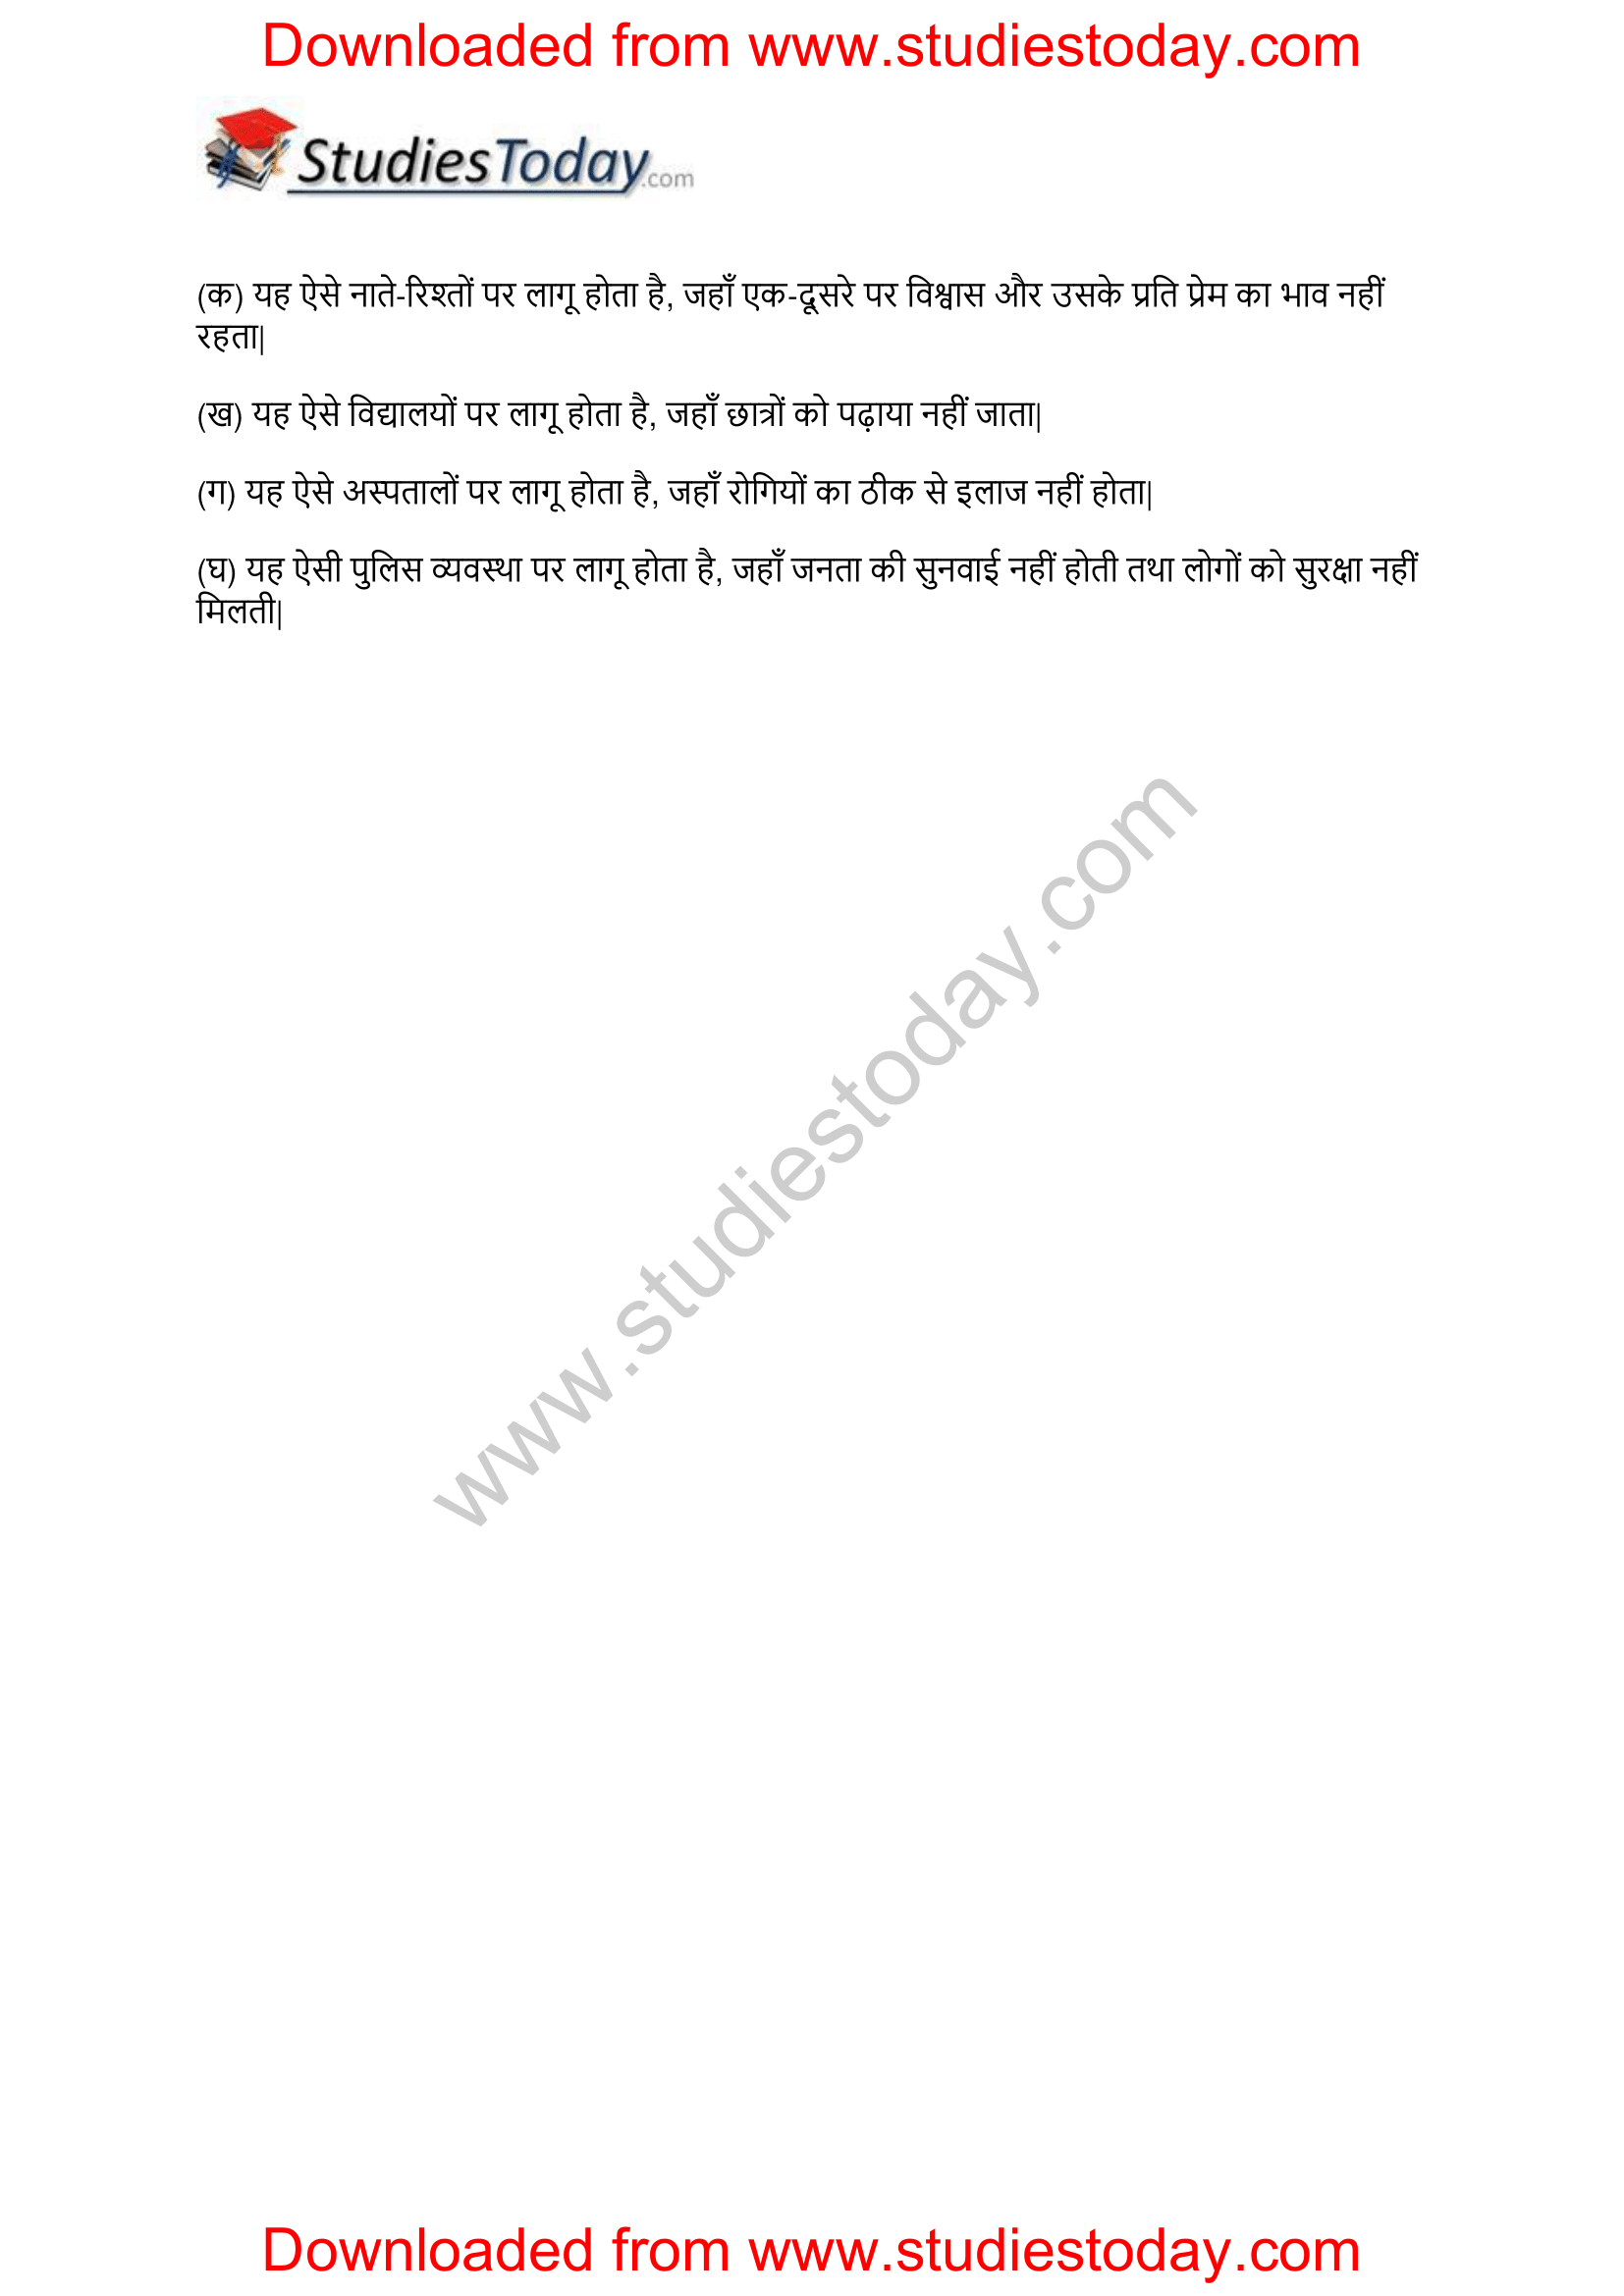 NCERT-Solutions-Class-11-Hindi-Aroh-Poem-Dushyant-Kumar-3